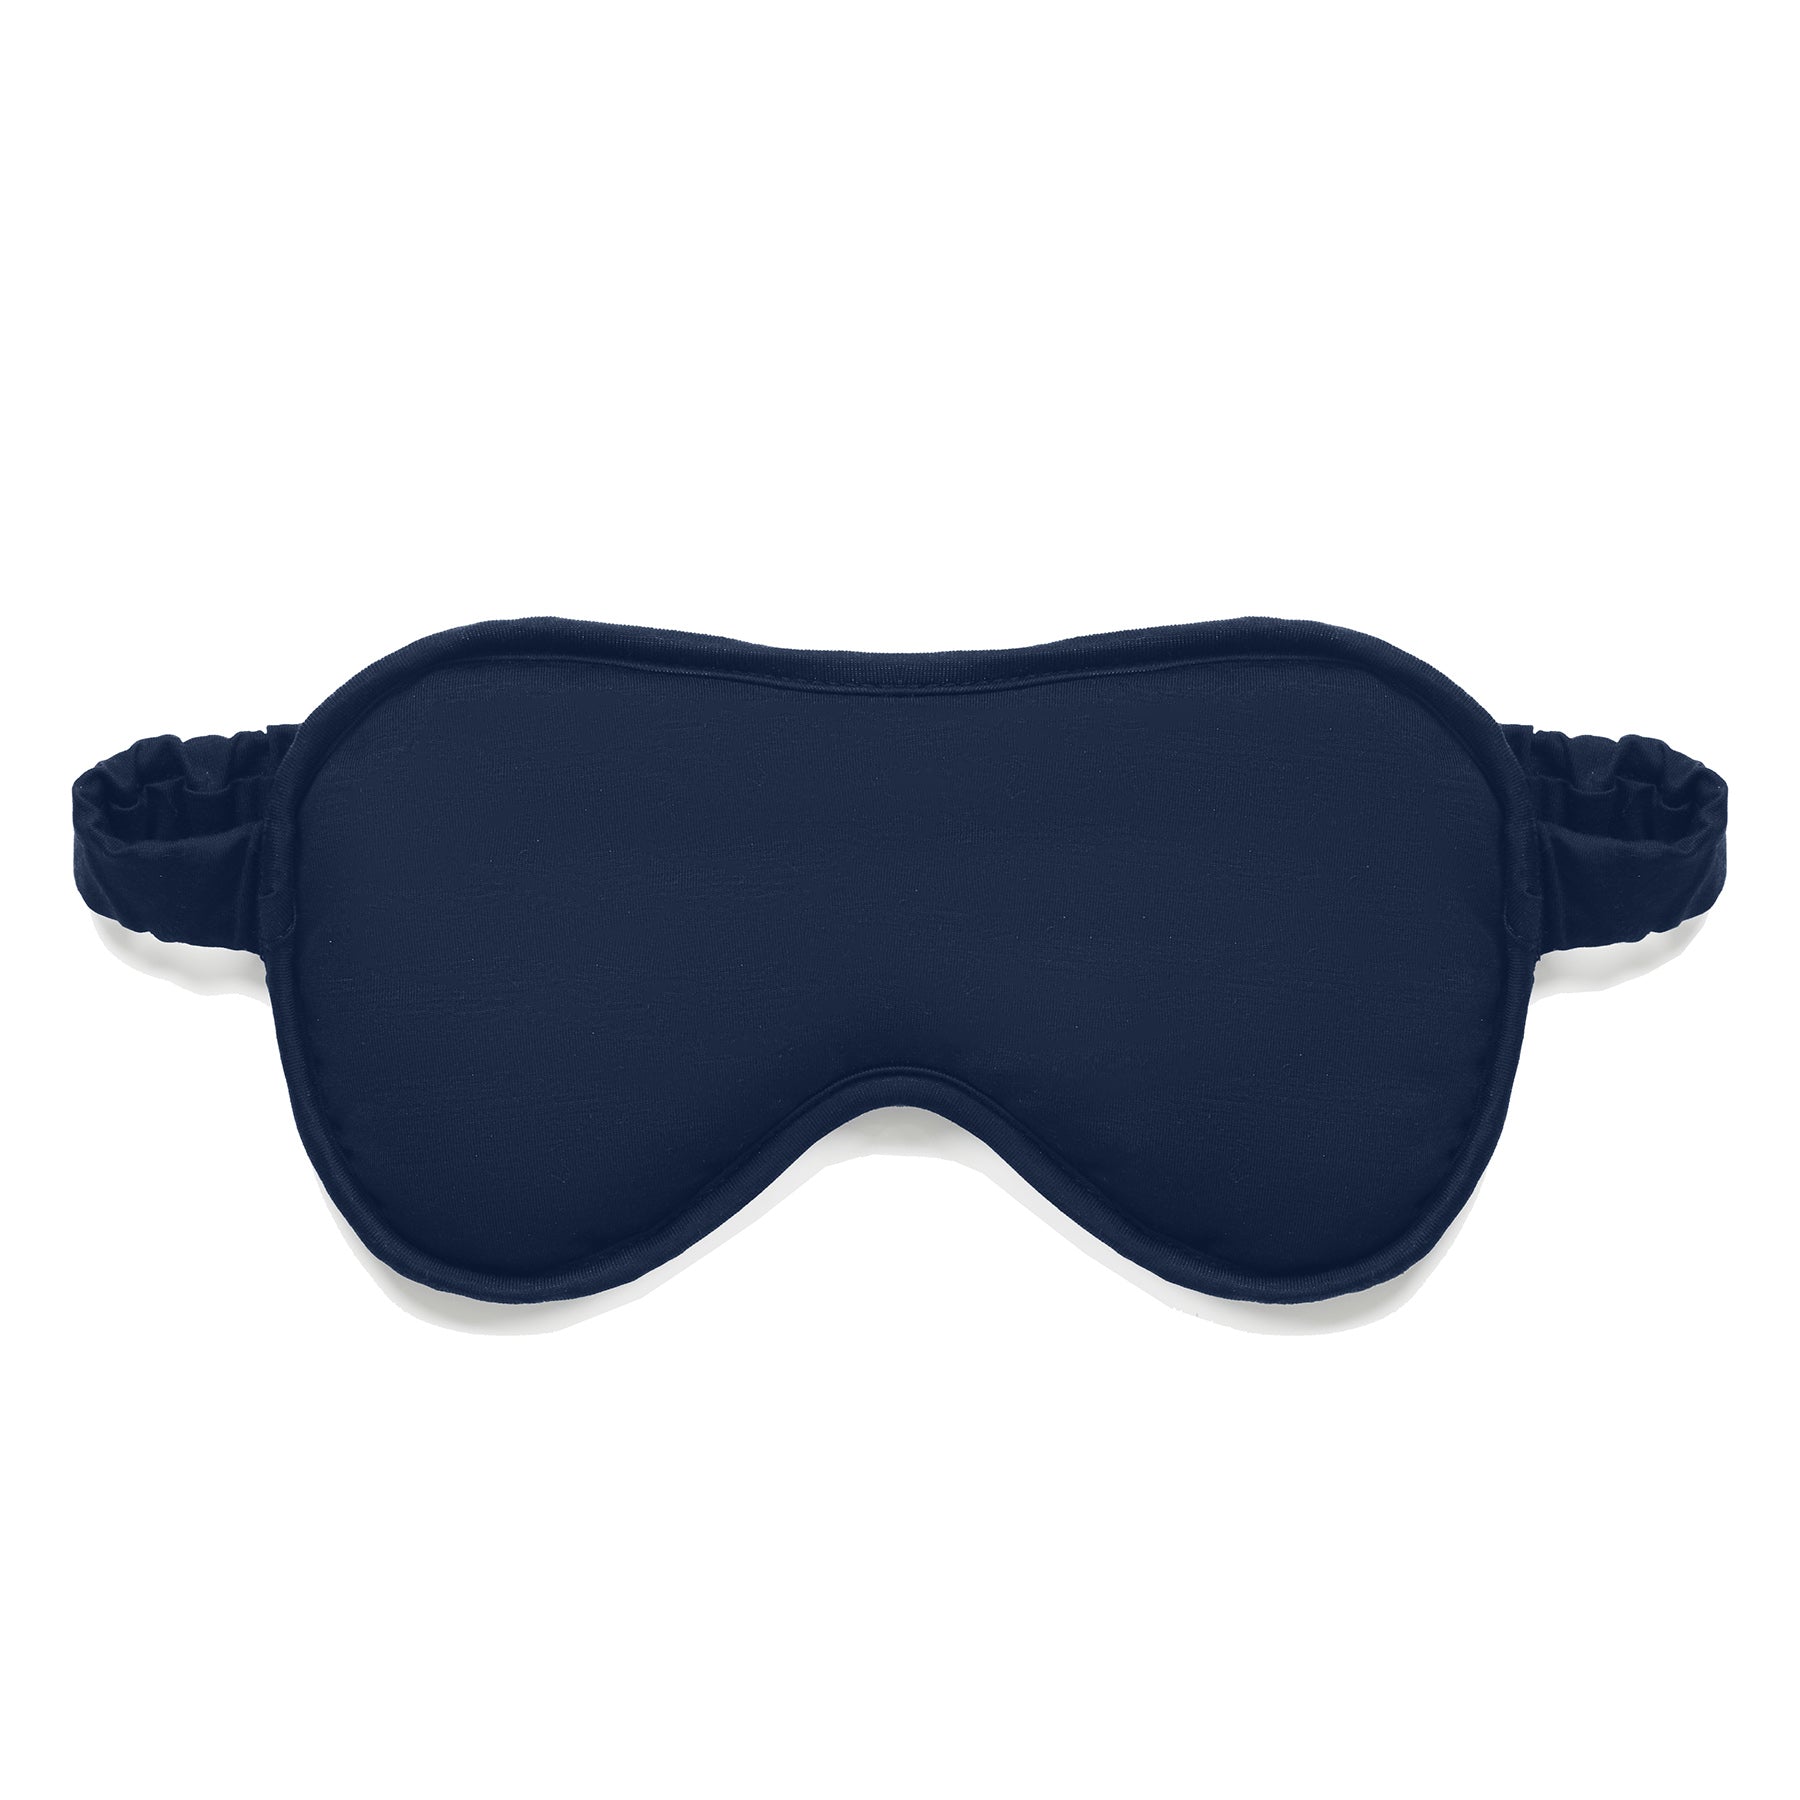 Cooling sleep mask || Navy blue